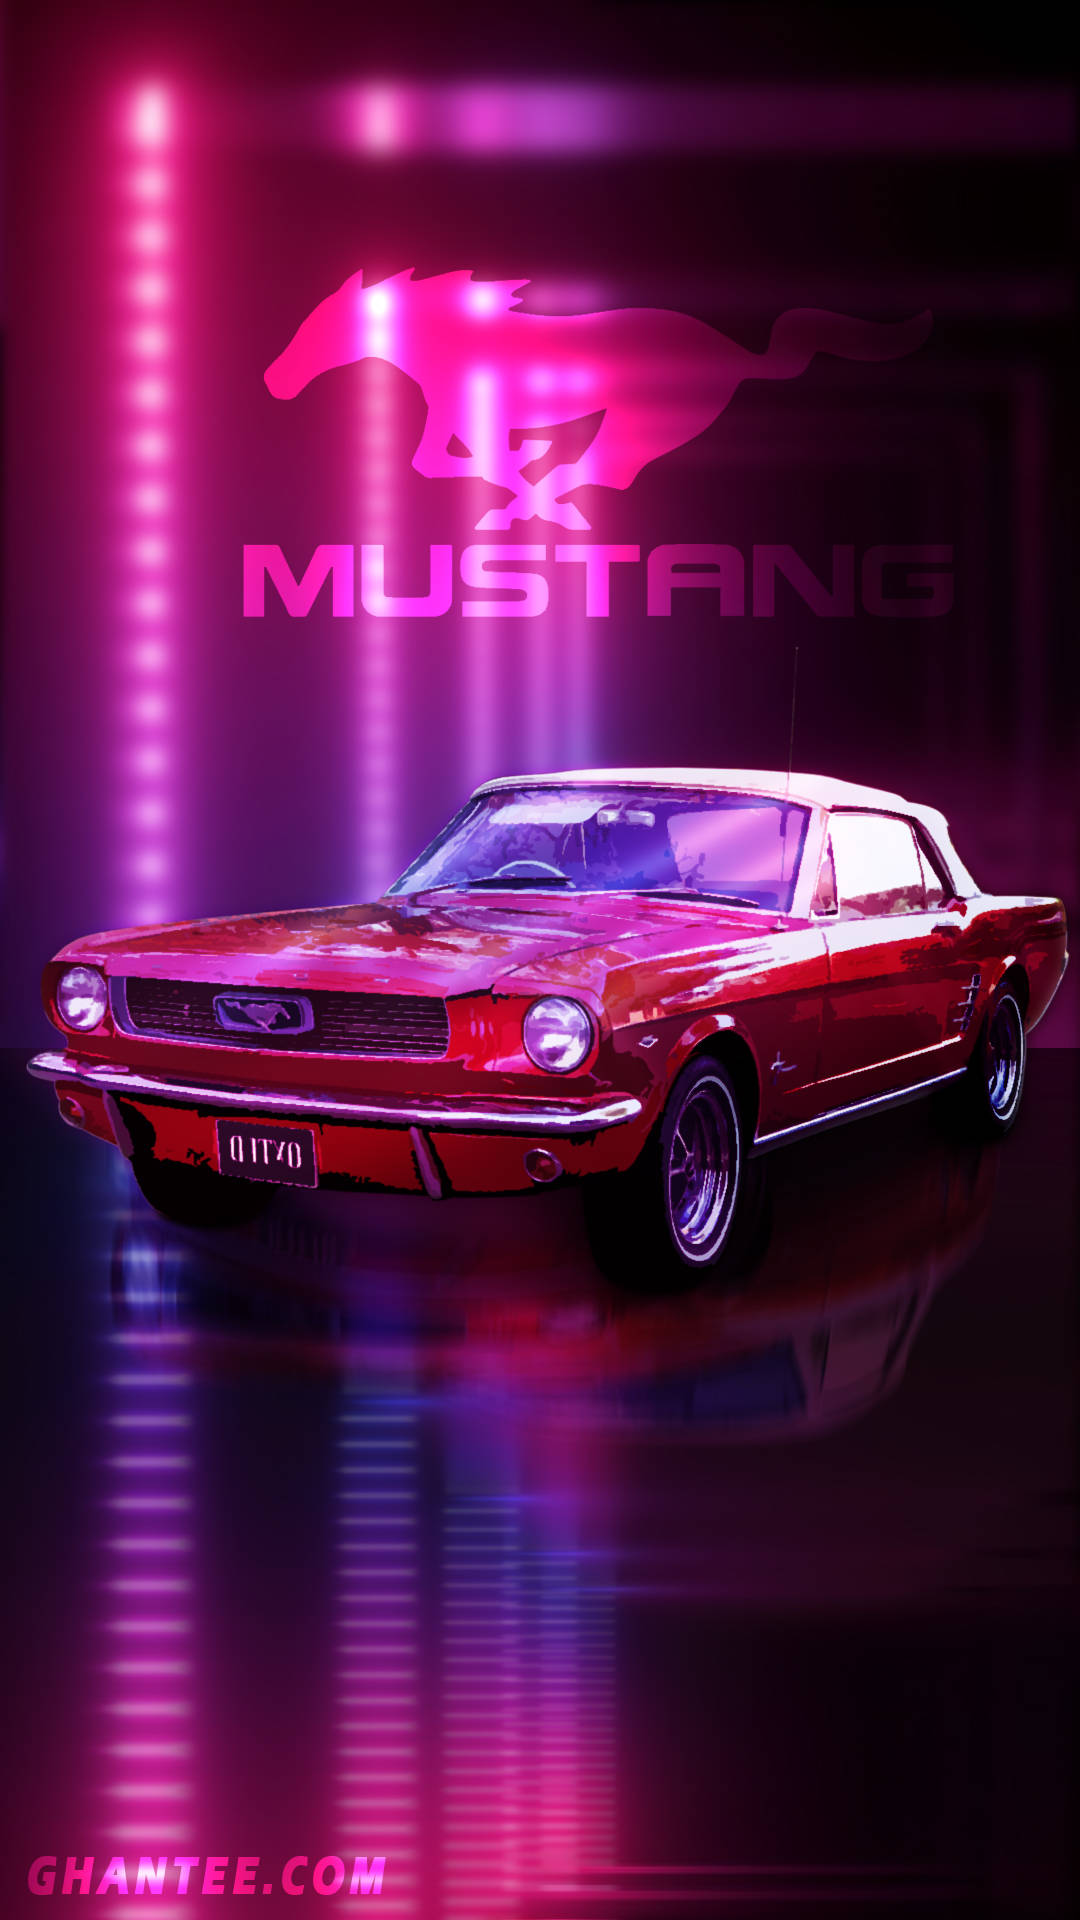 Vintage Red Mustang Wallpaper